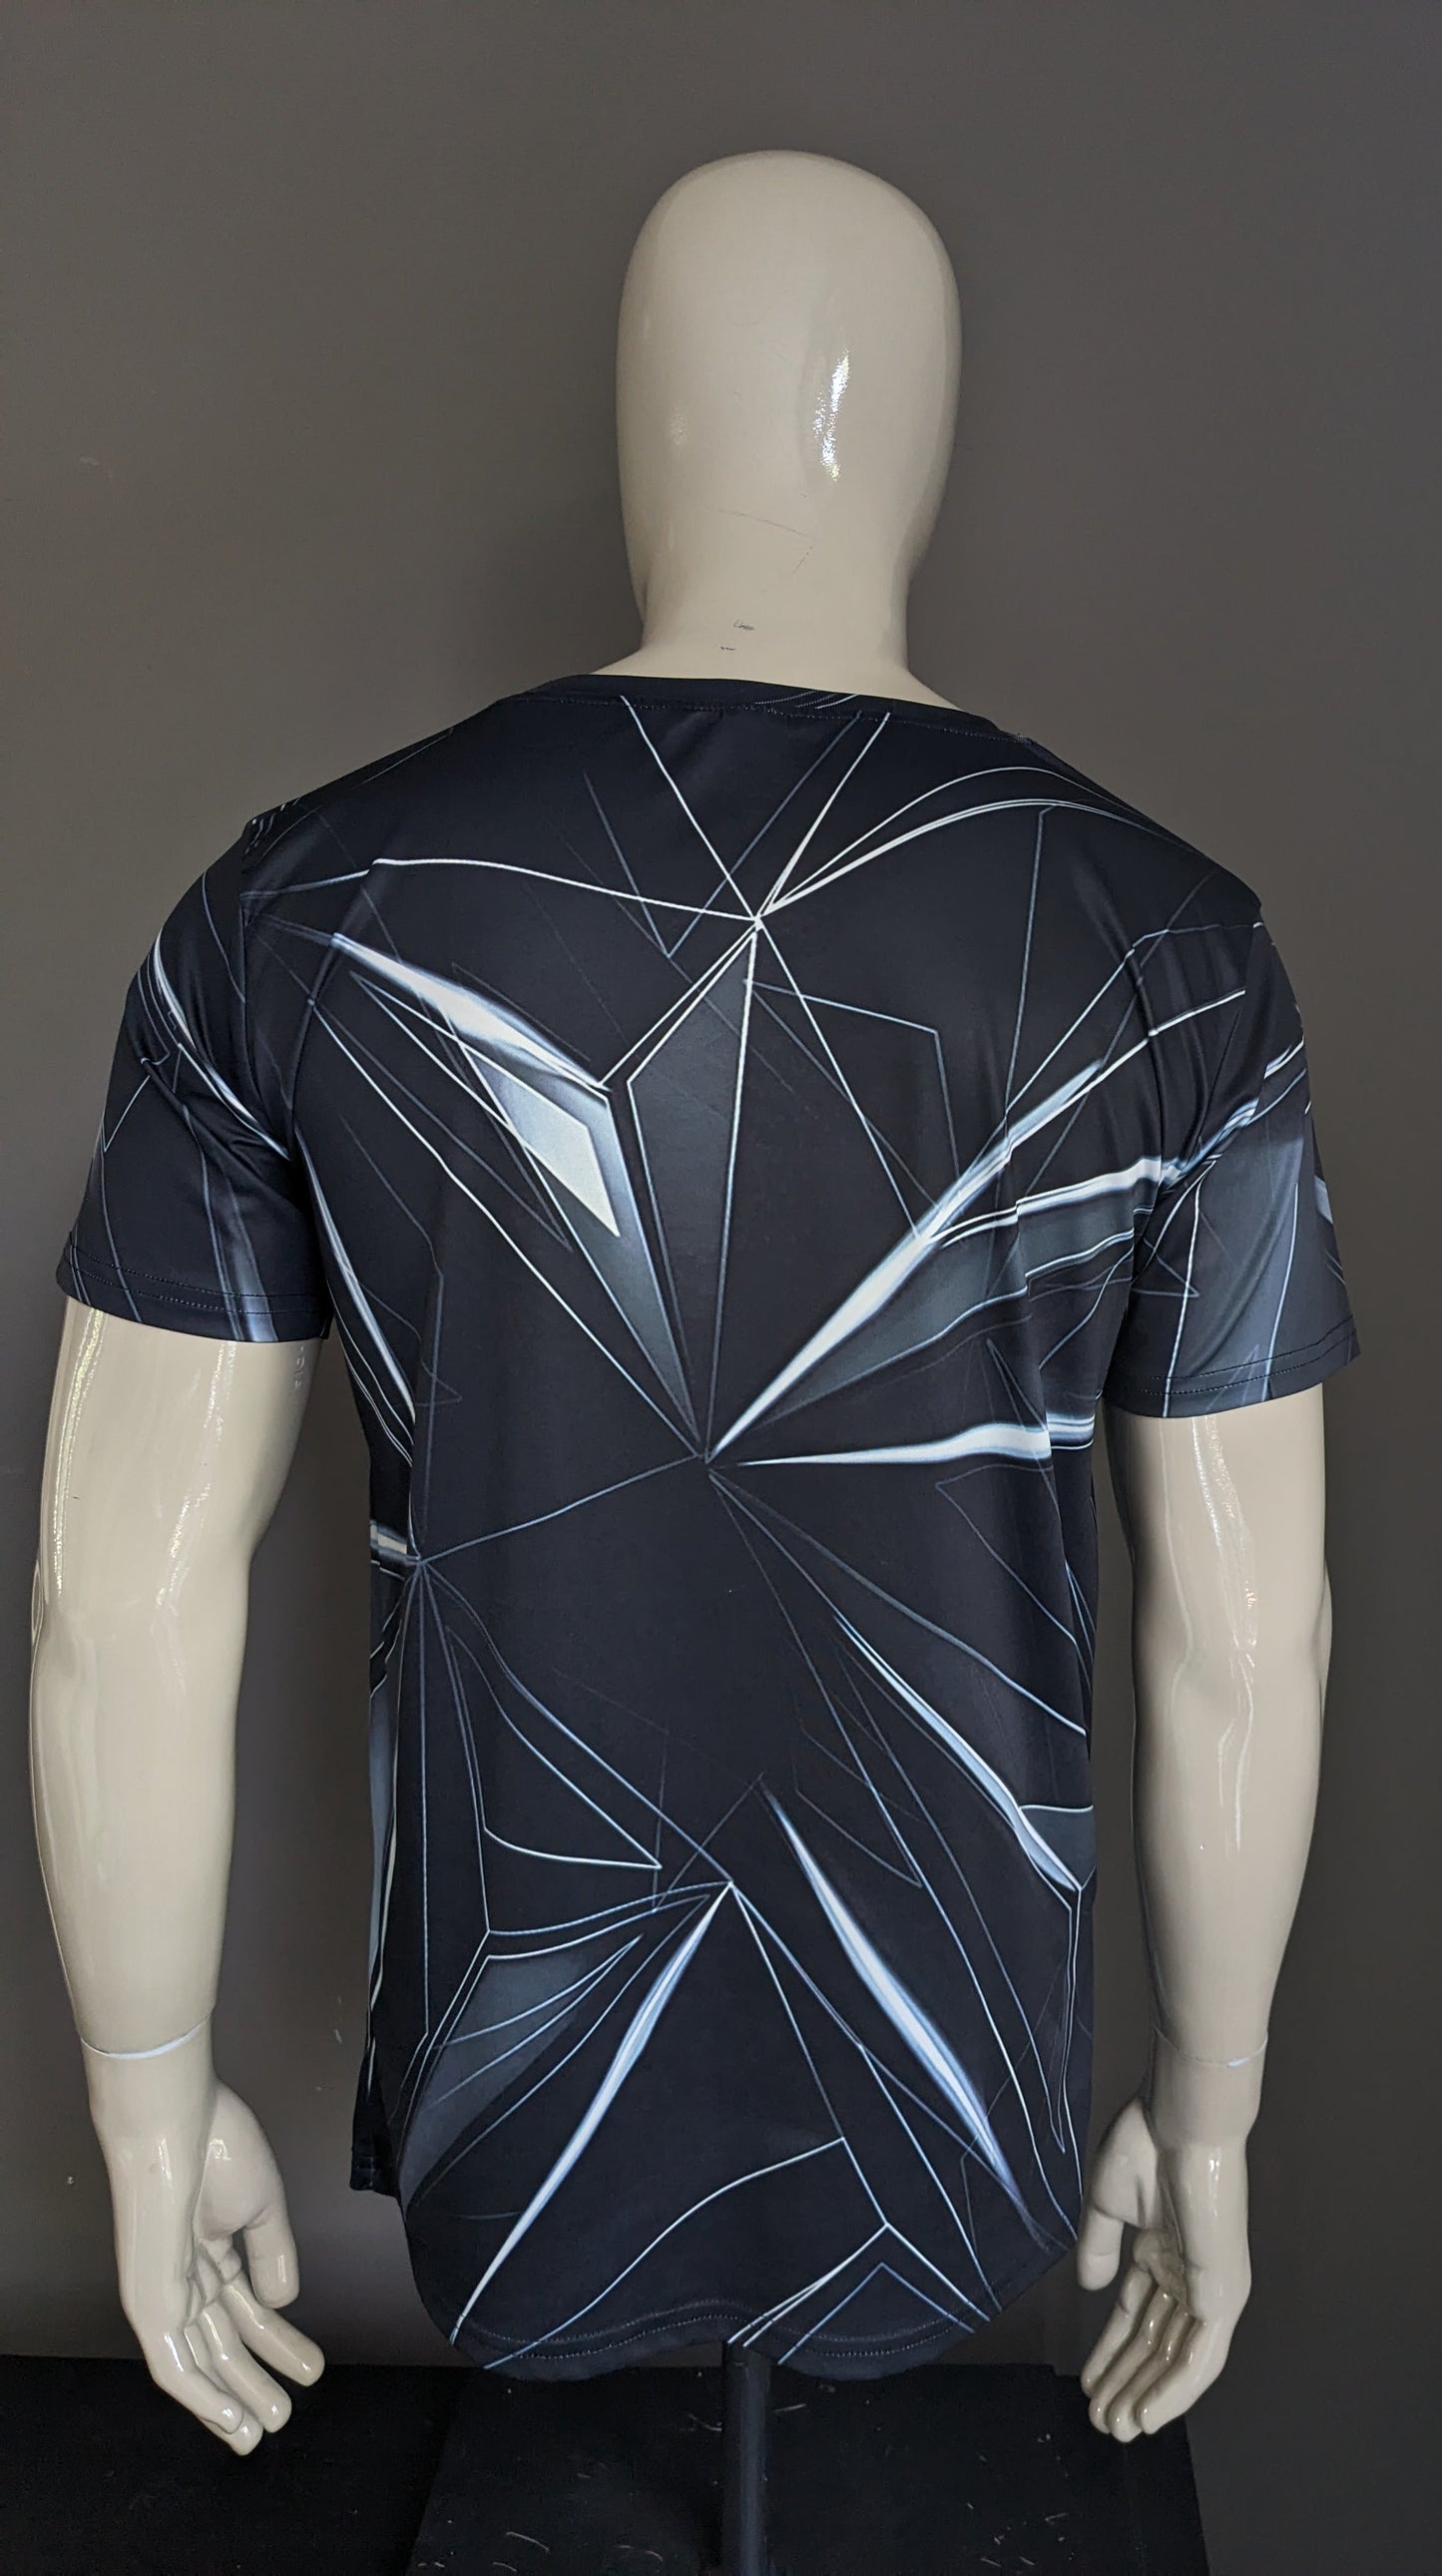 Geometric Print shirt. Black white colored. Size M. Stretch.